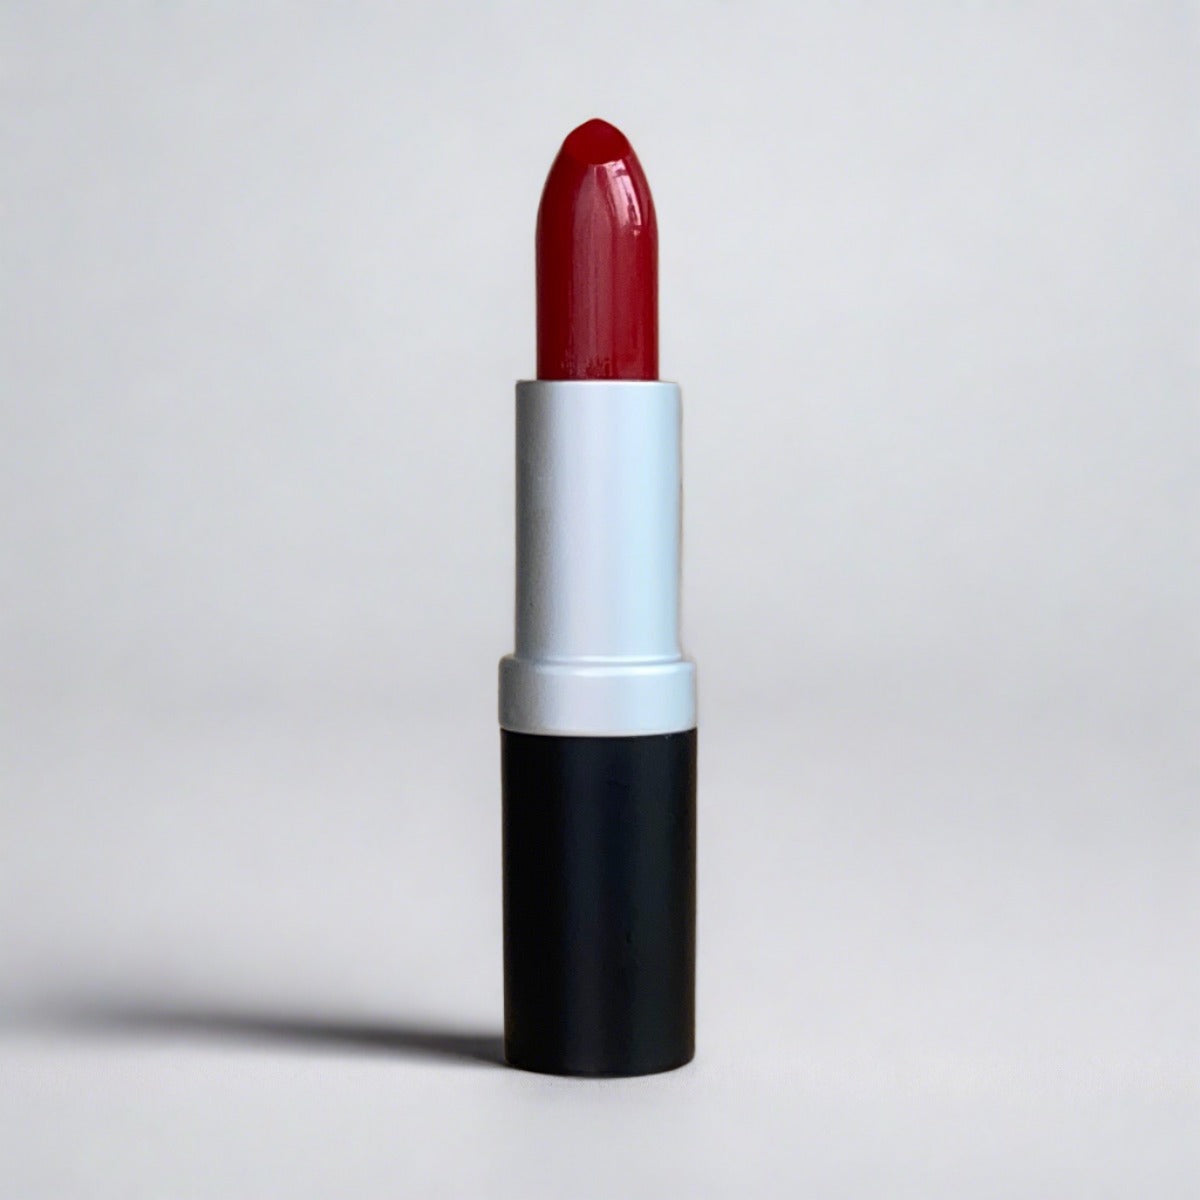 classic red lipstick